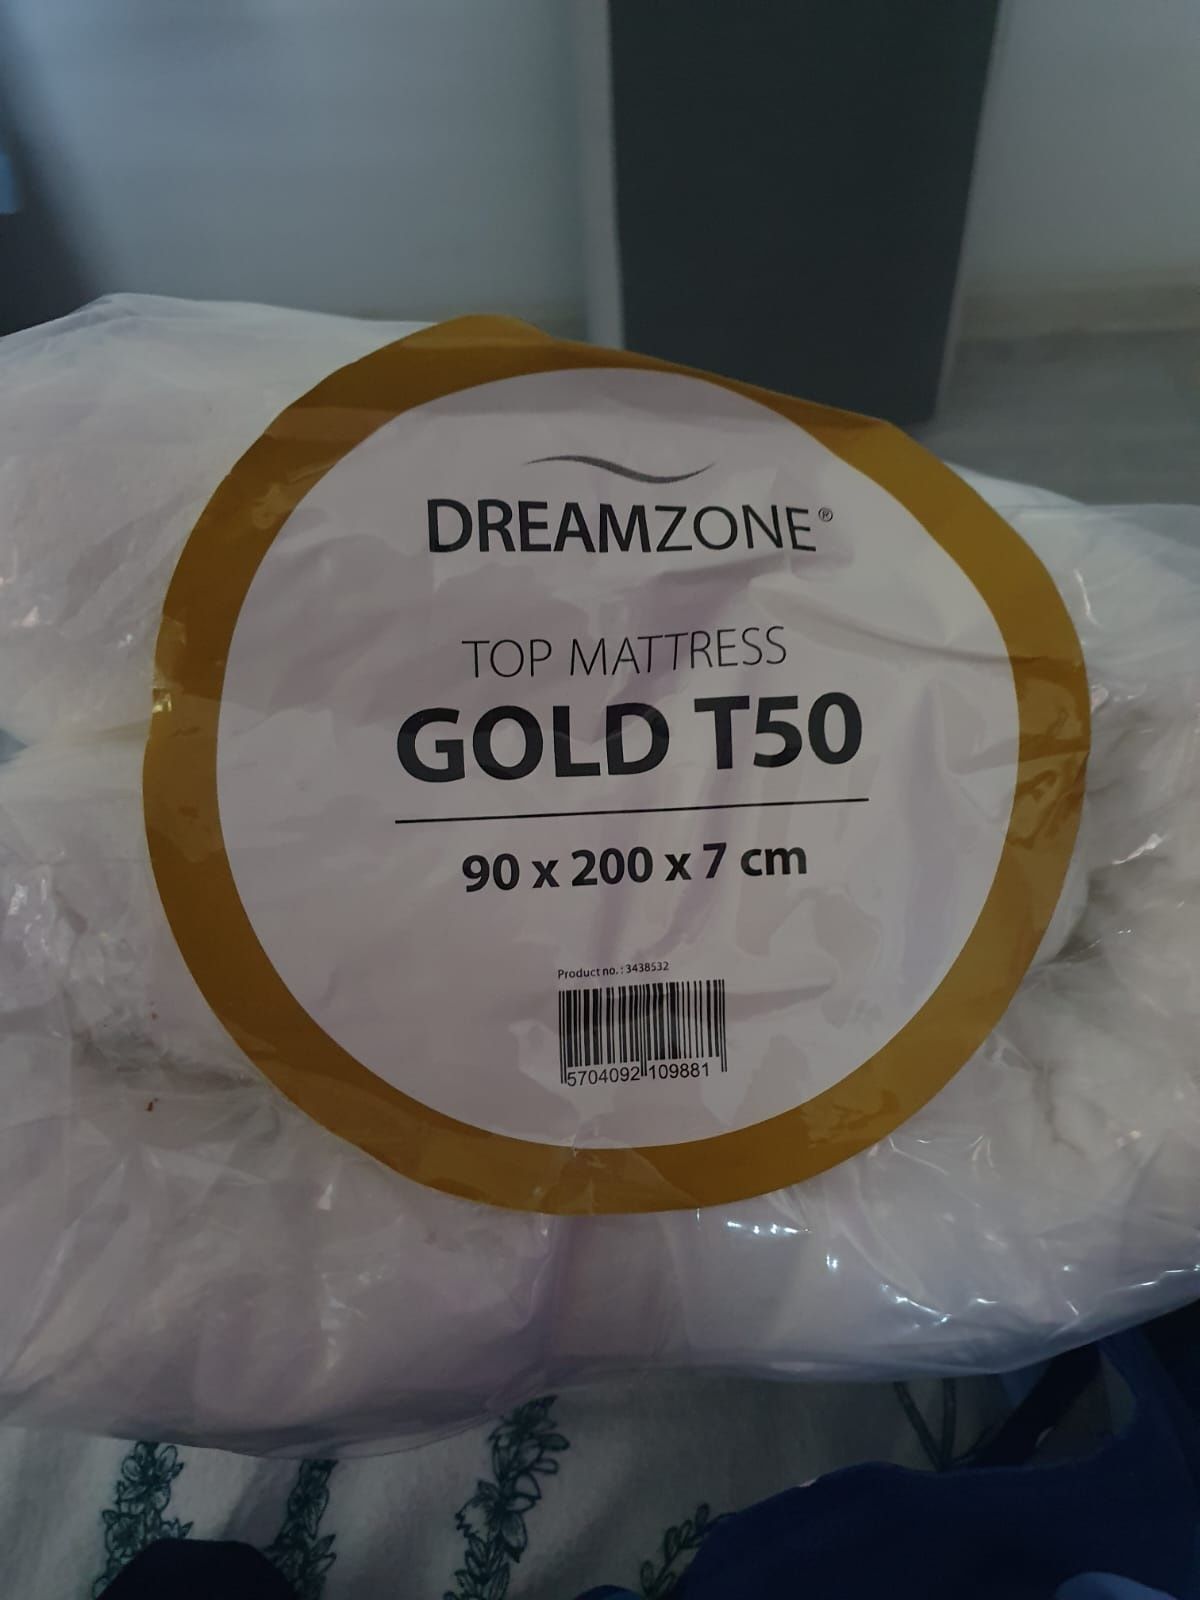 Topmaterac 90x200 GOLD TOP T50 dreamzone